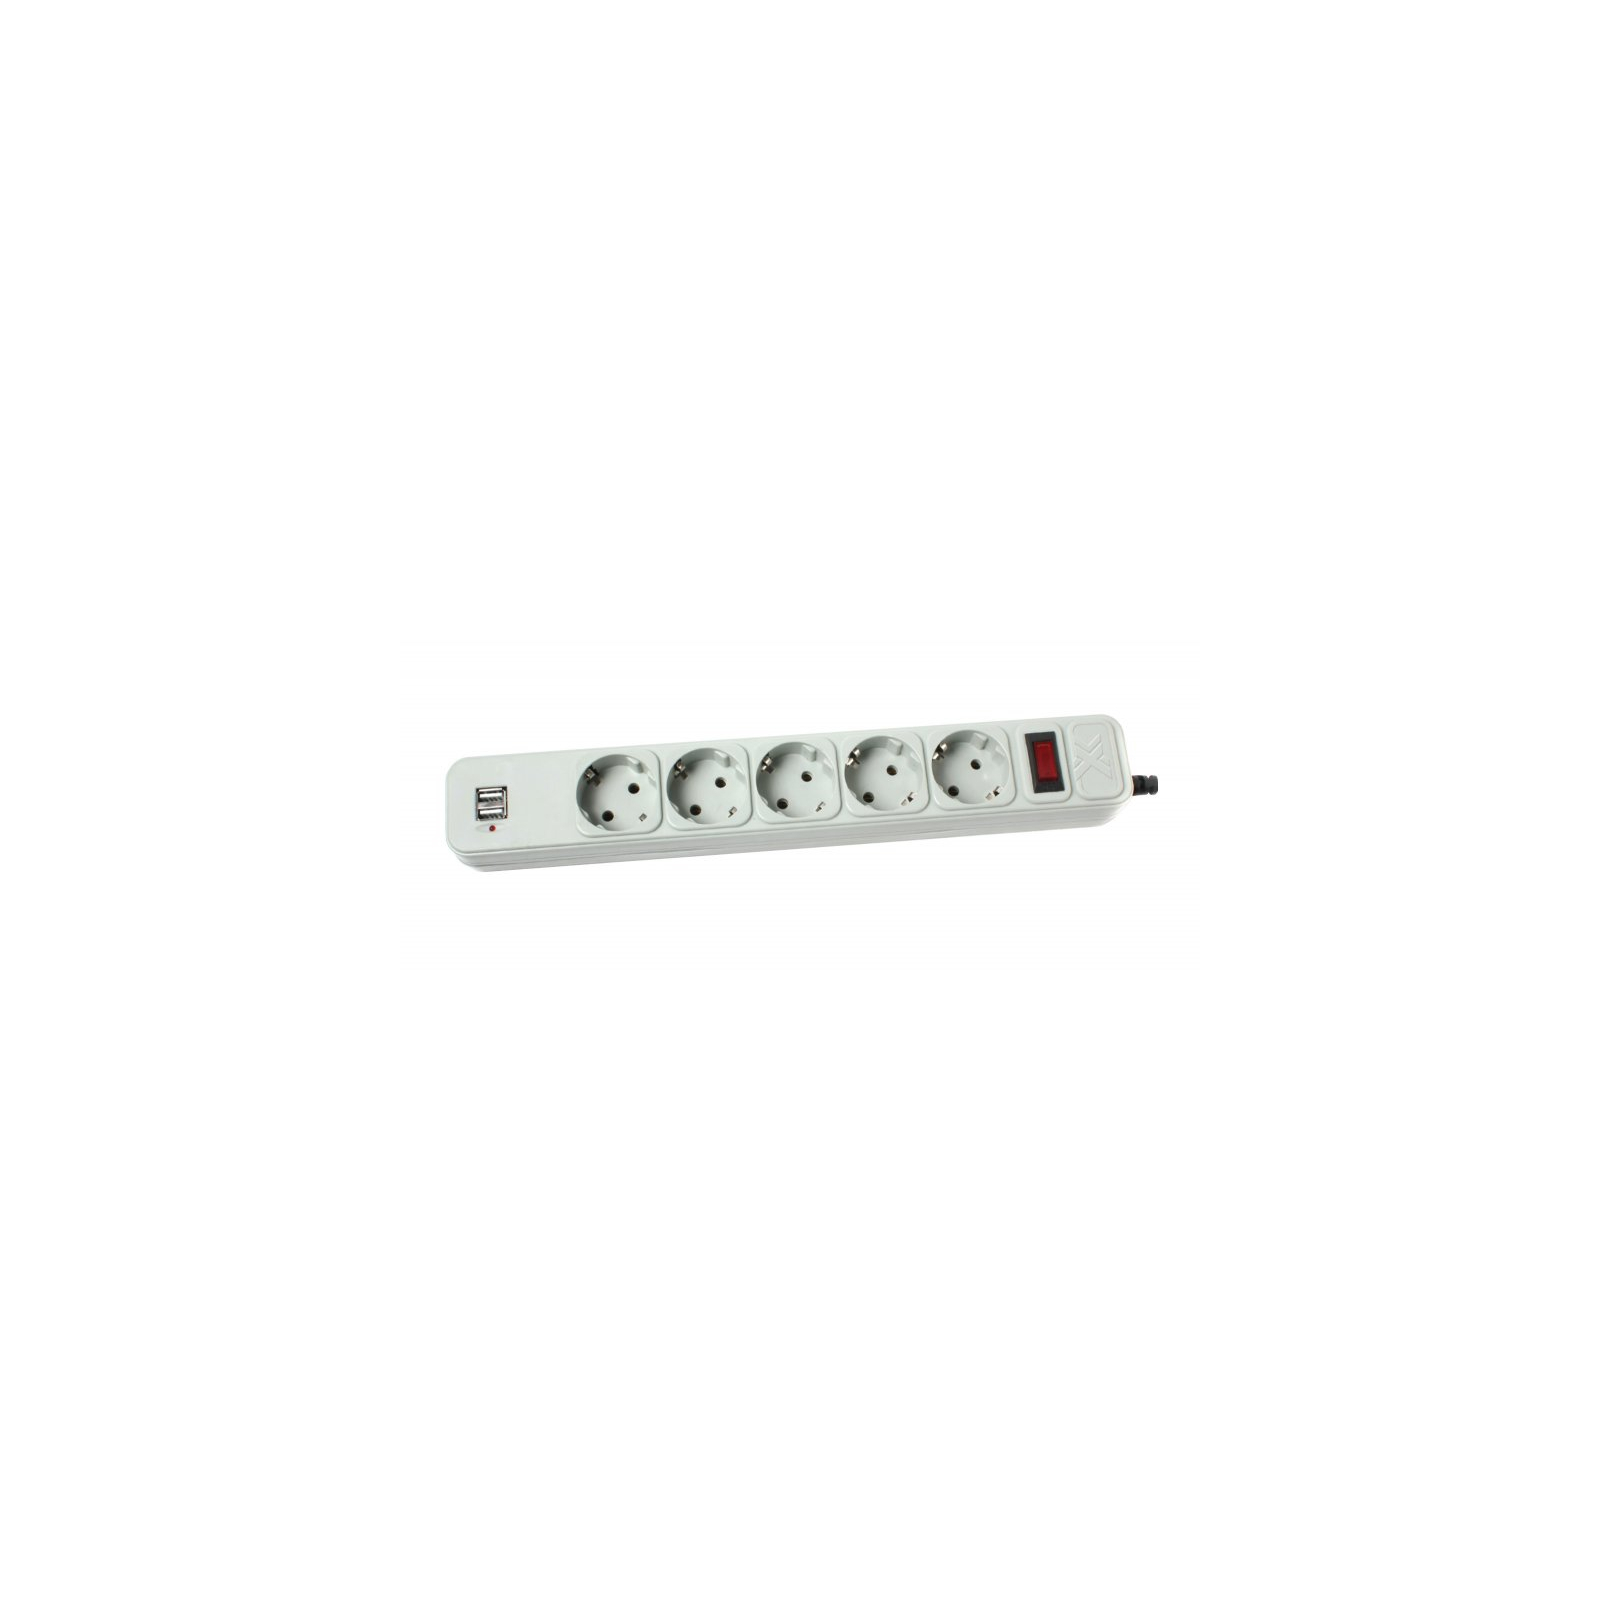 Сетевой фильтр питания Maxxtro PWE-05K-5, Grey, 4.5 м кабель, 5 розеток, USB зарядка 2А (PWE-05K-5)